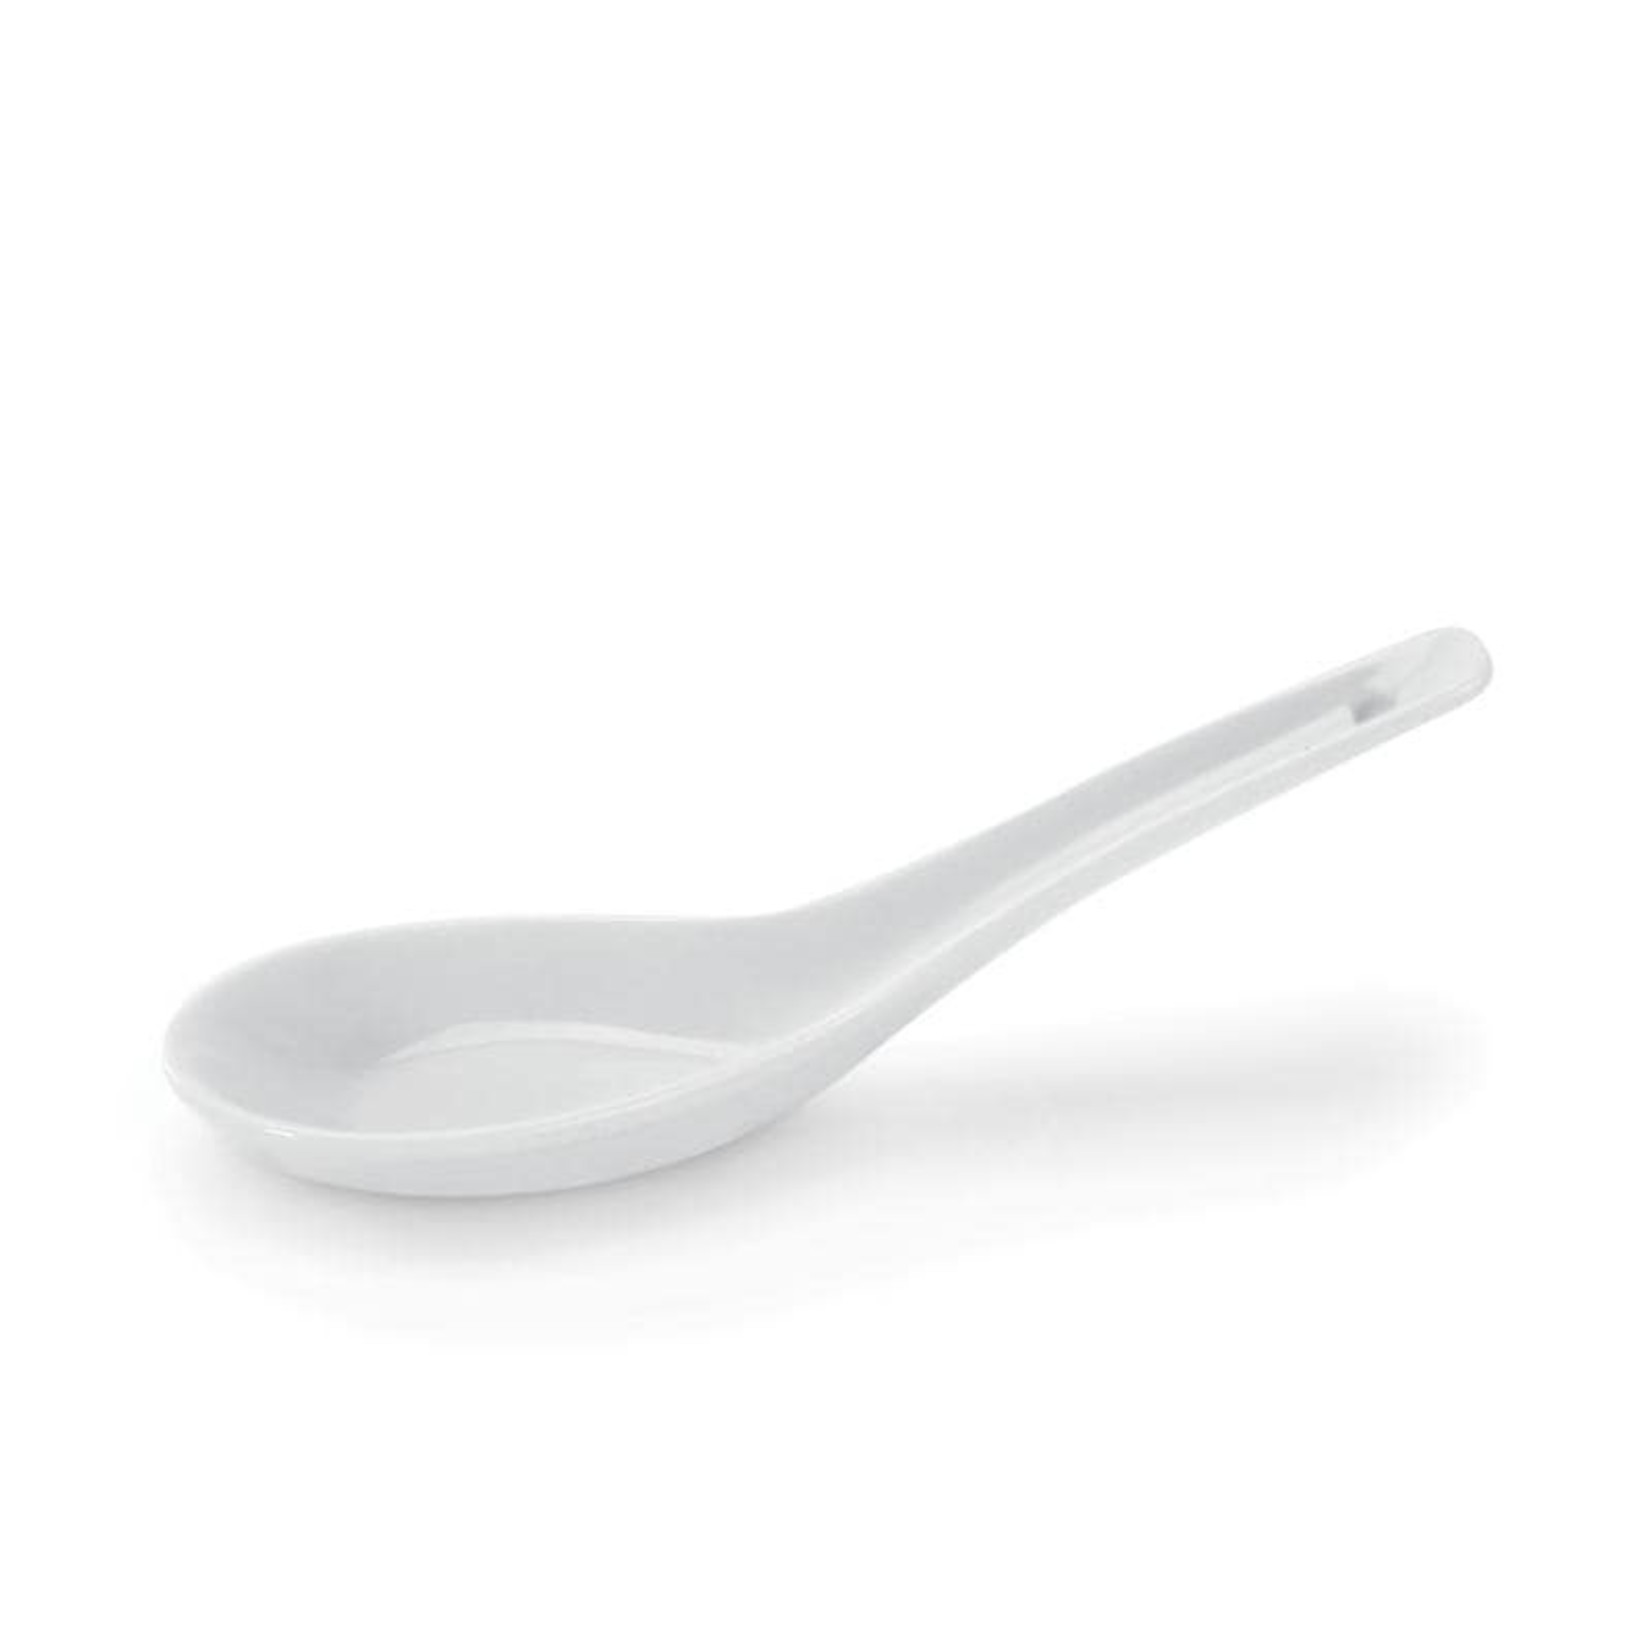 DANESCO BIA Lotus Spoon 6" - White